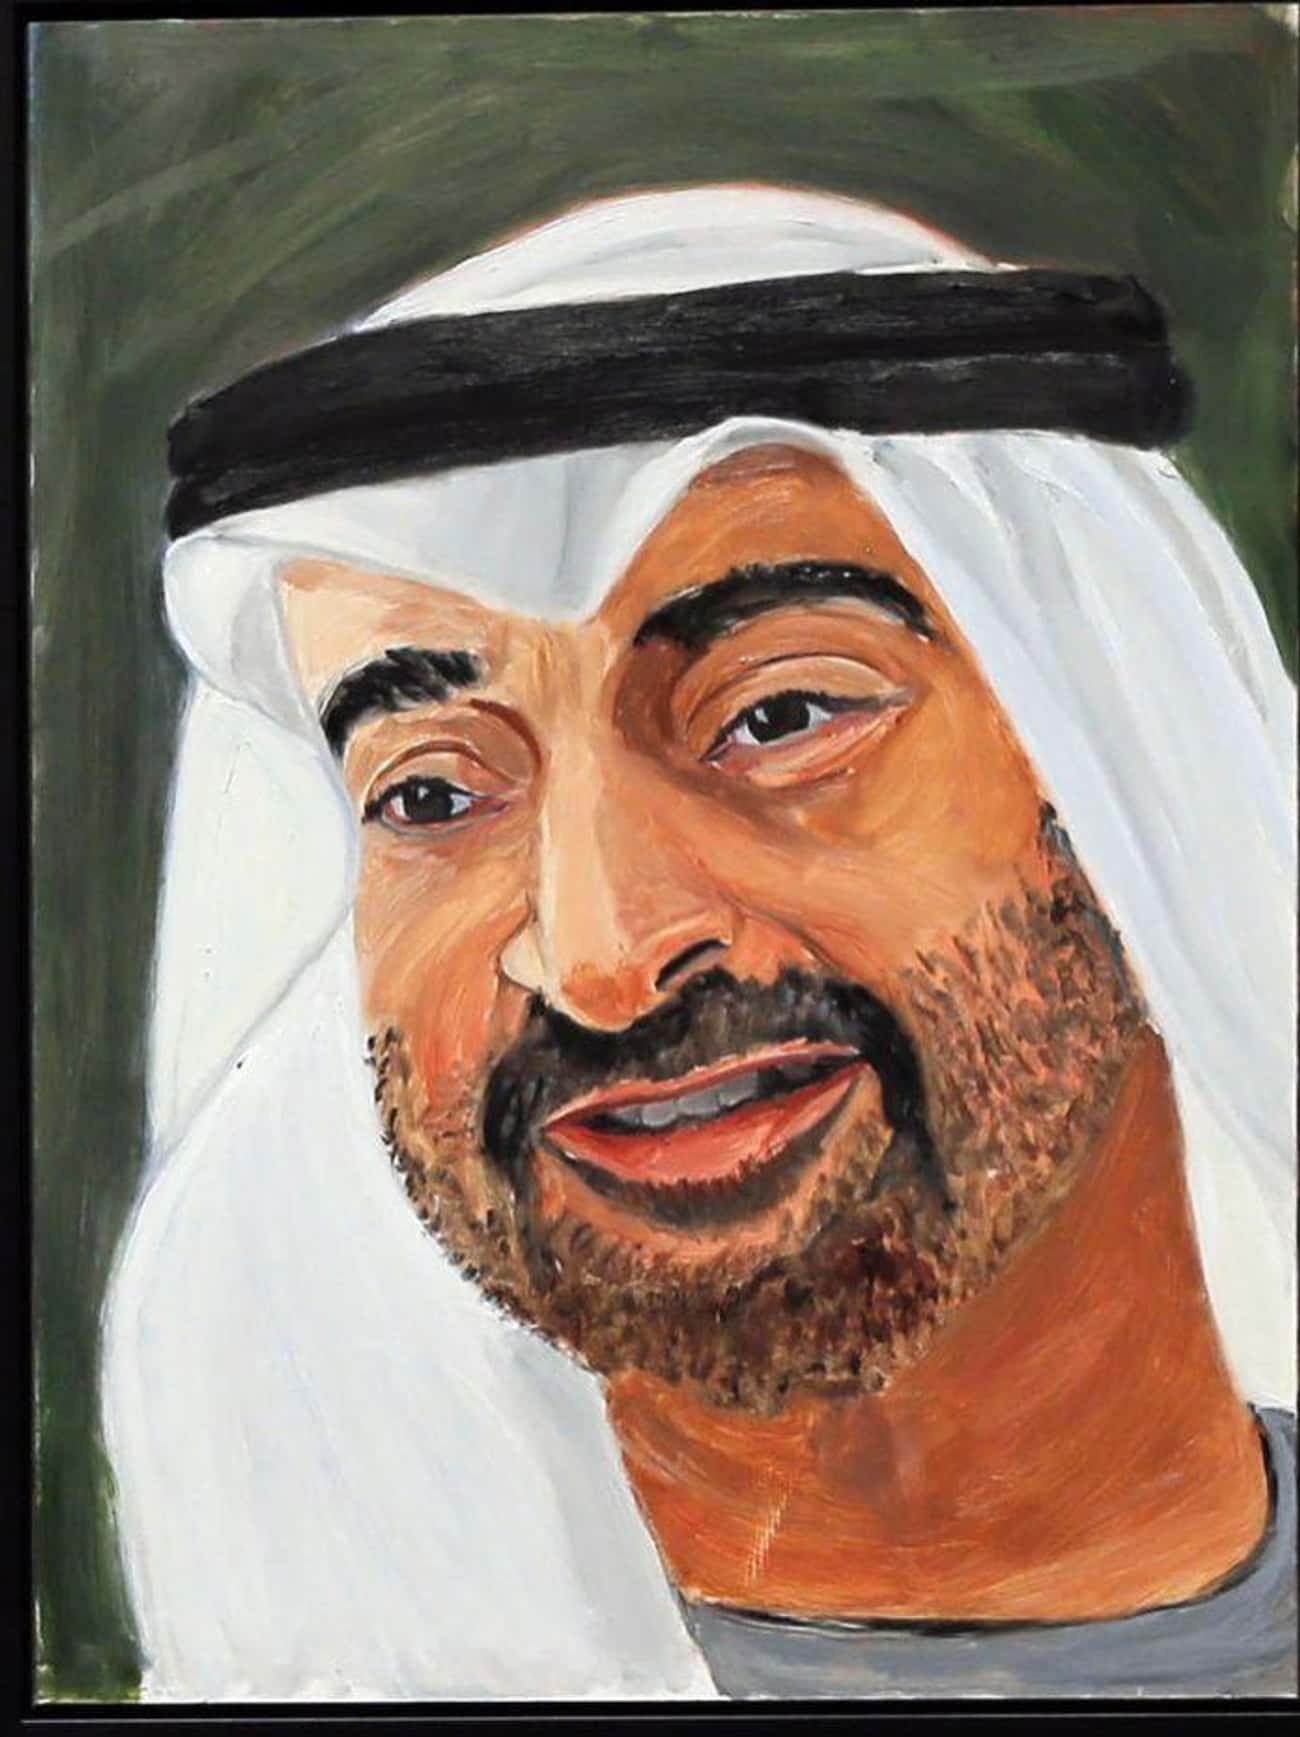 Crown Prince Of Abu Dhabi Mohamed bin Zayed Al Nahyan